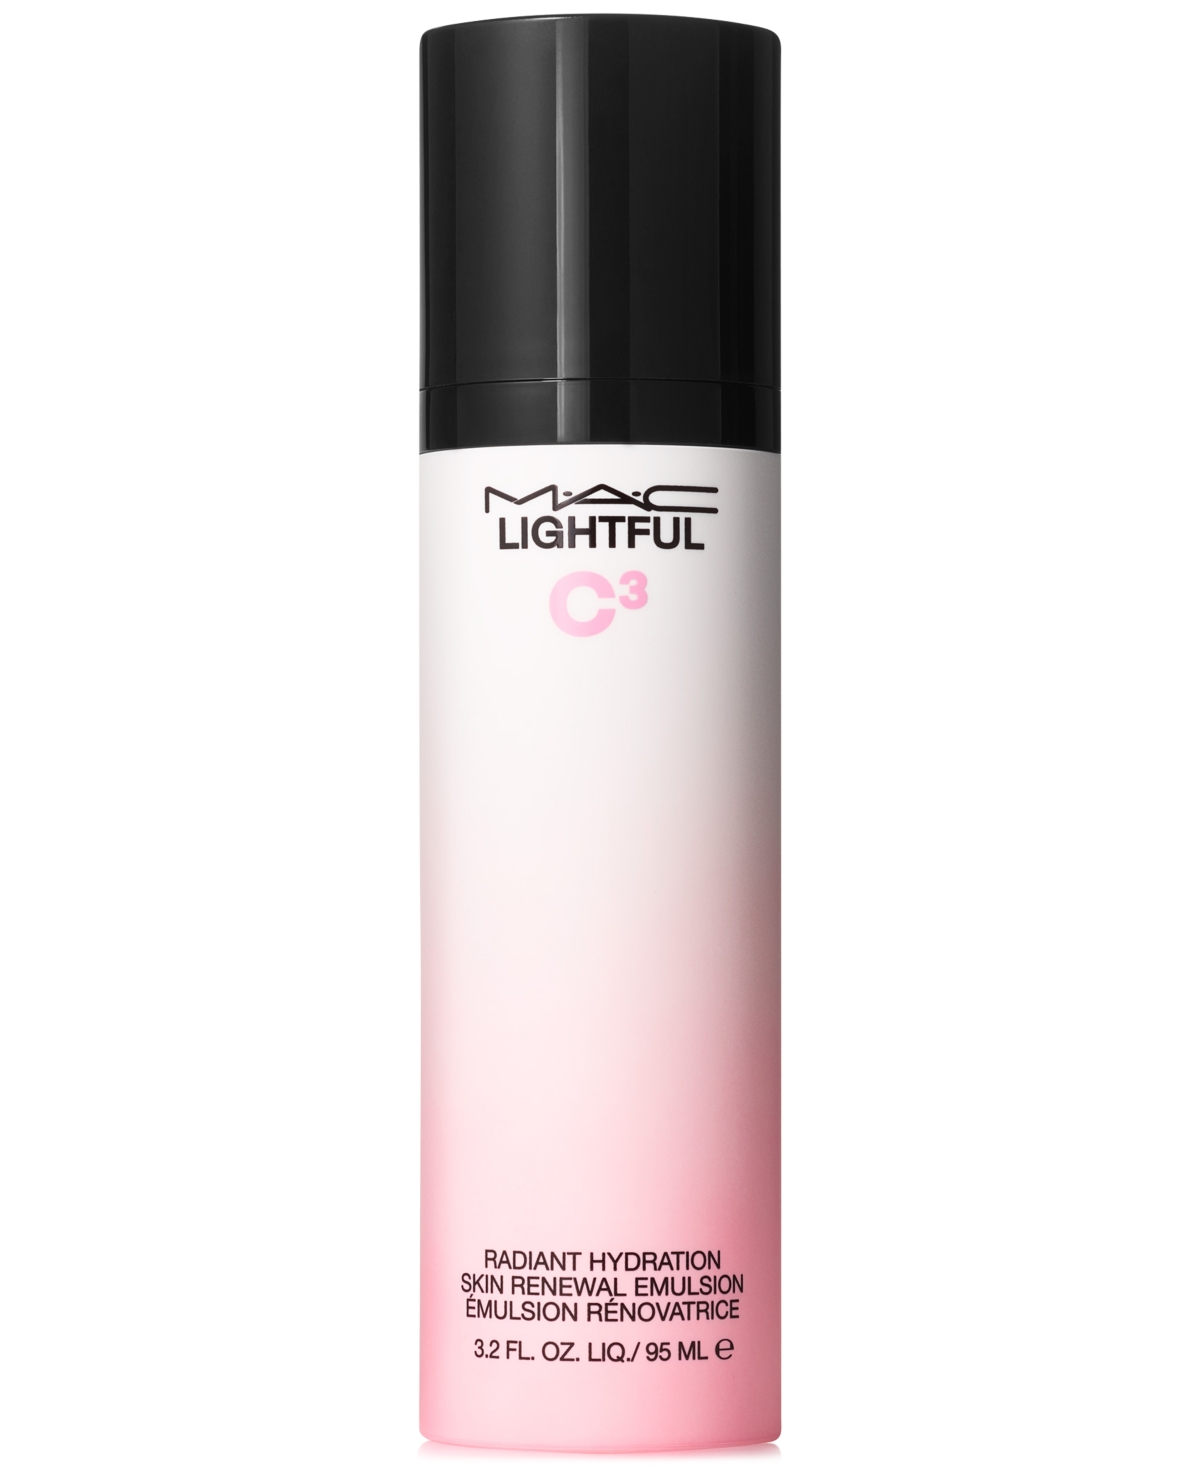 Mac Lightful C³ Radiant Hydration Skin Renewal Emulsion In No Color